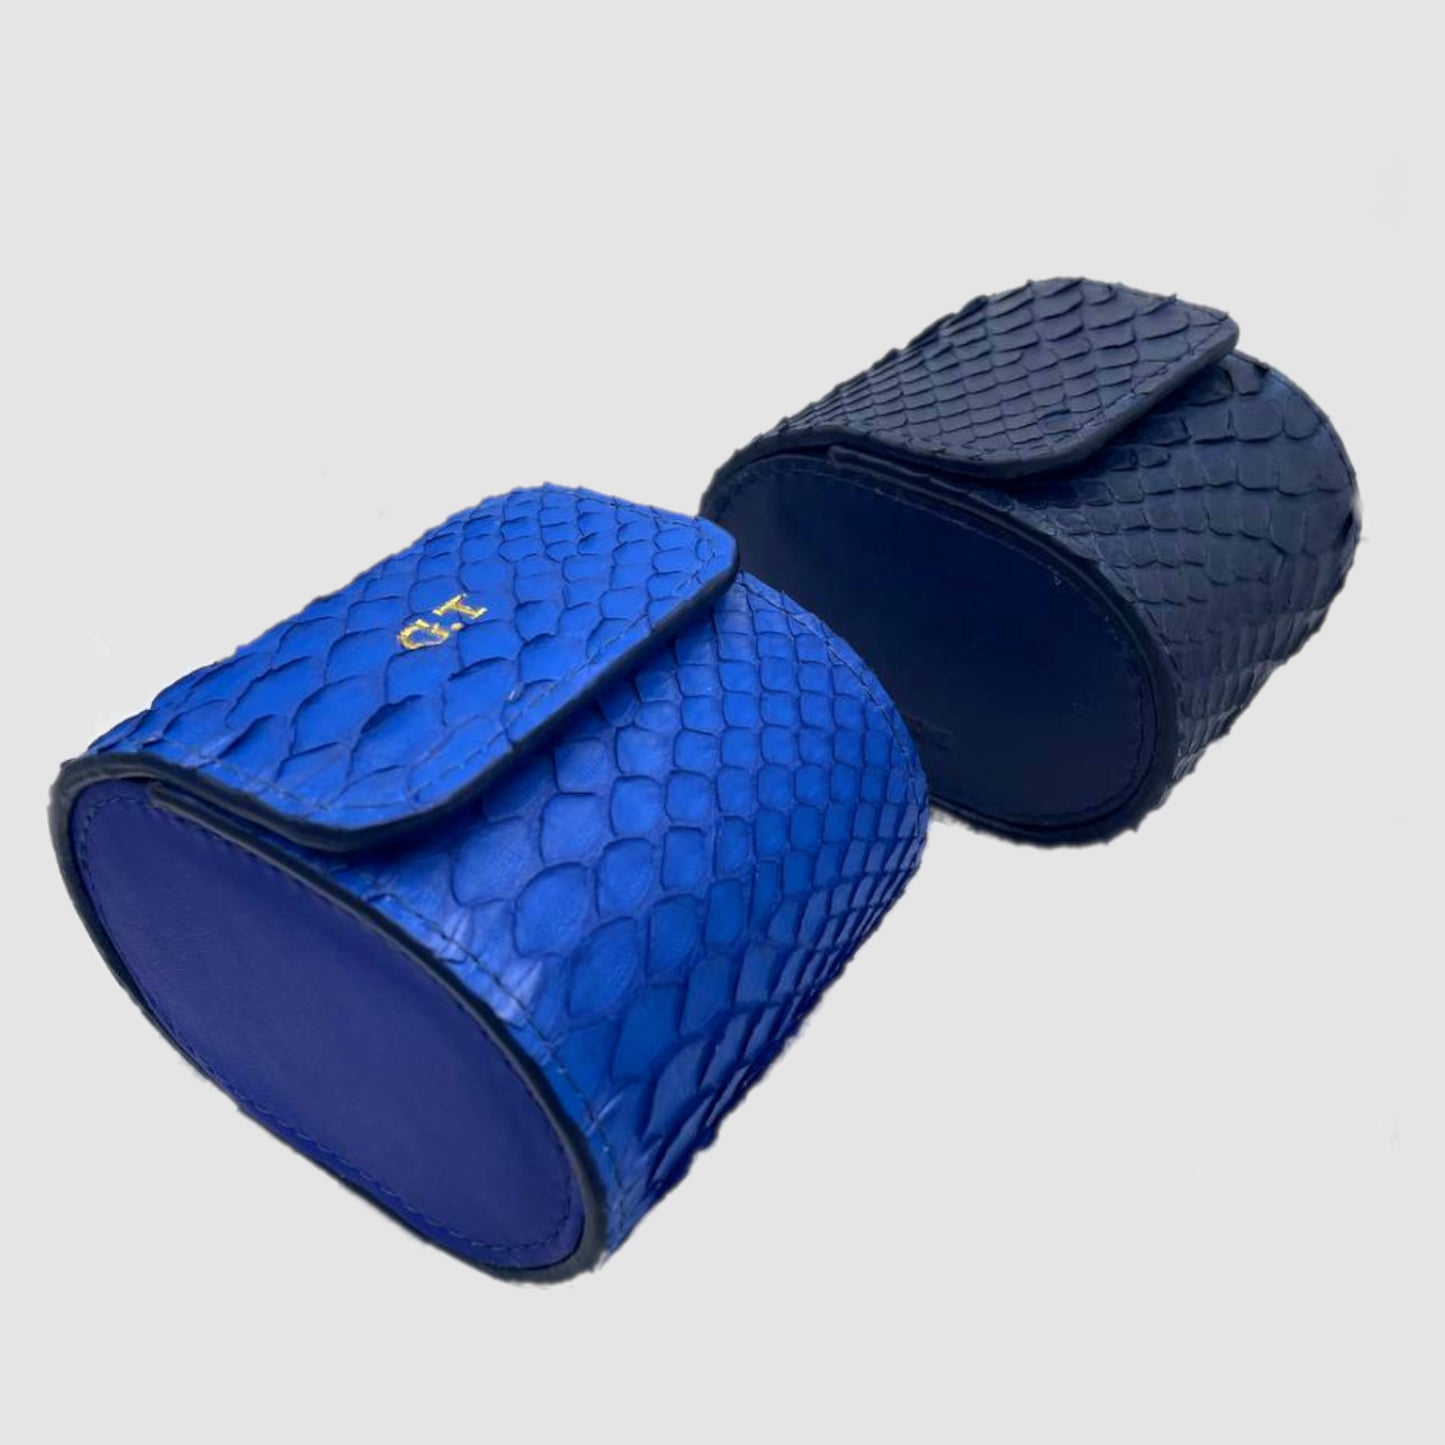 Watch Roll in genuine Python skin personalized - Navy Blue